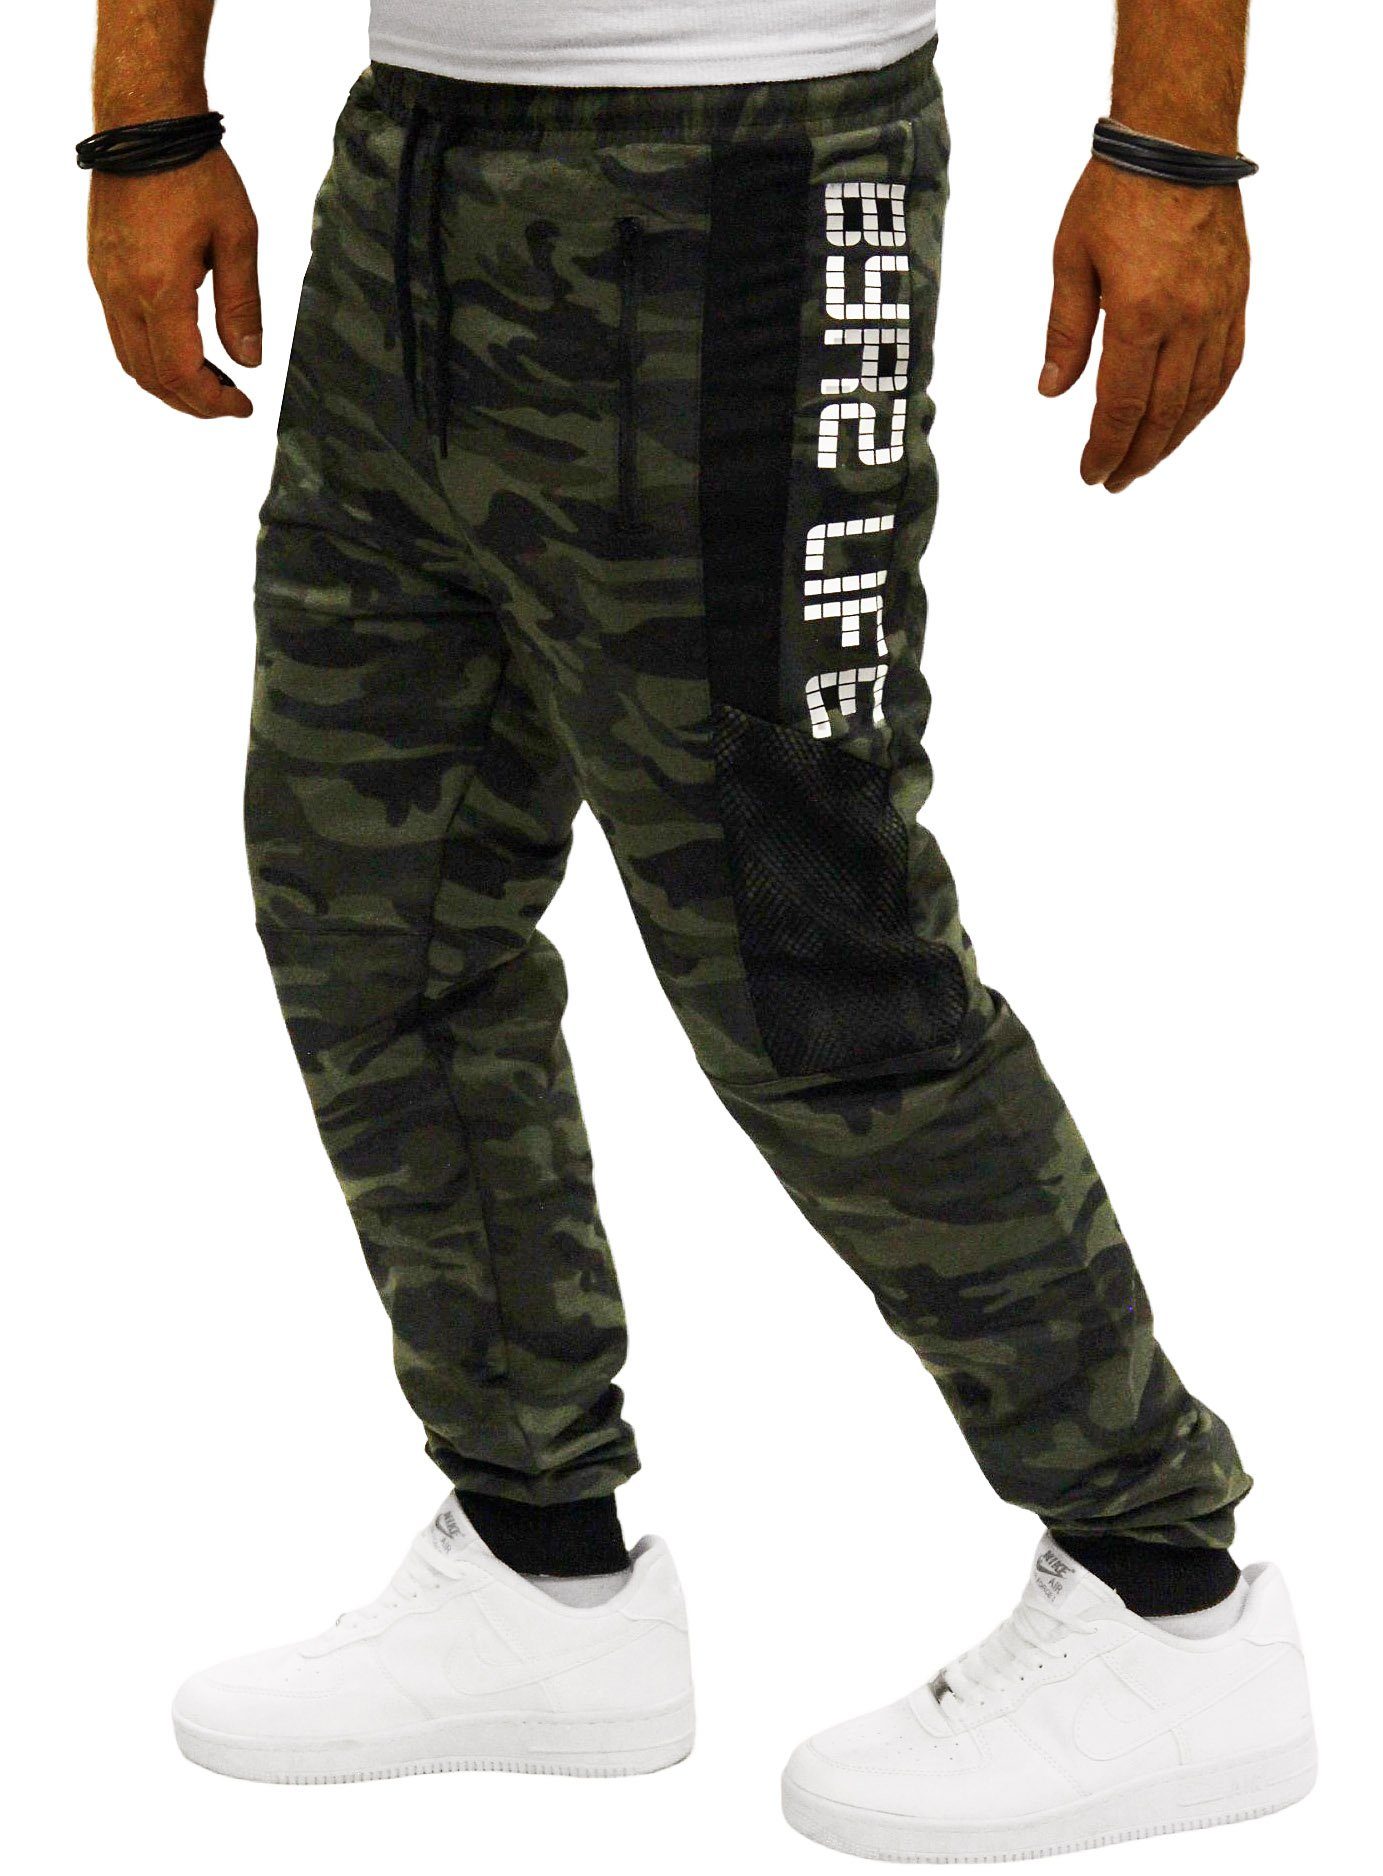 RMK Sporthose Herren Army Trainingshose Hose Camou-Dunkel Camouflage Jogginghose Tarn (H.79) Fitnesshose